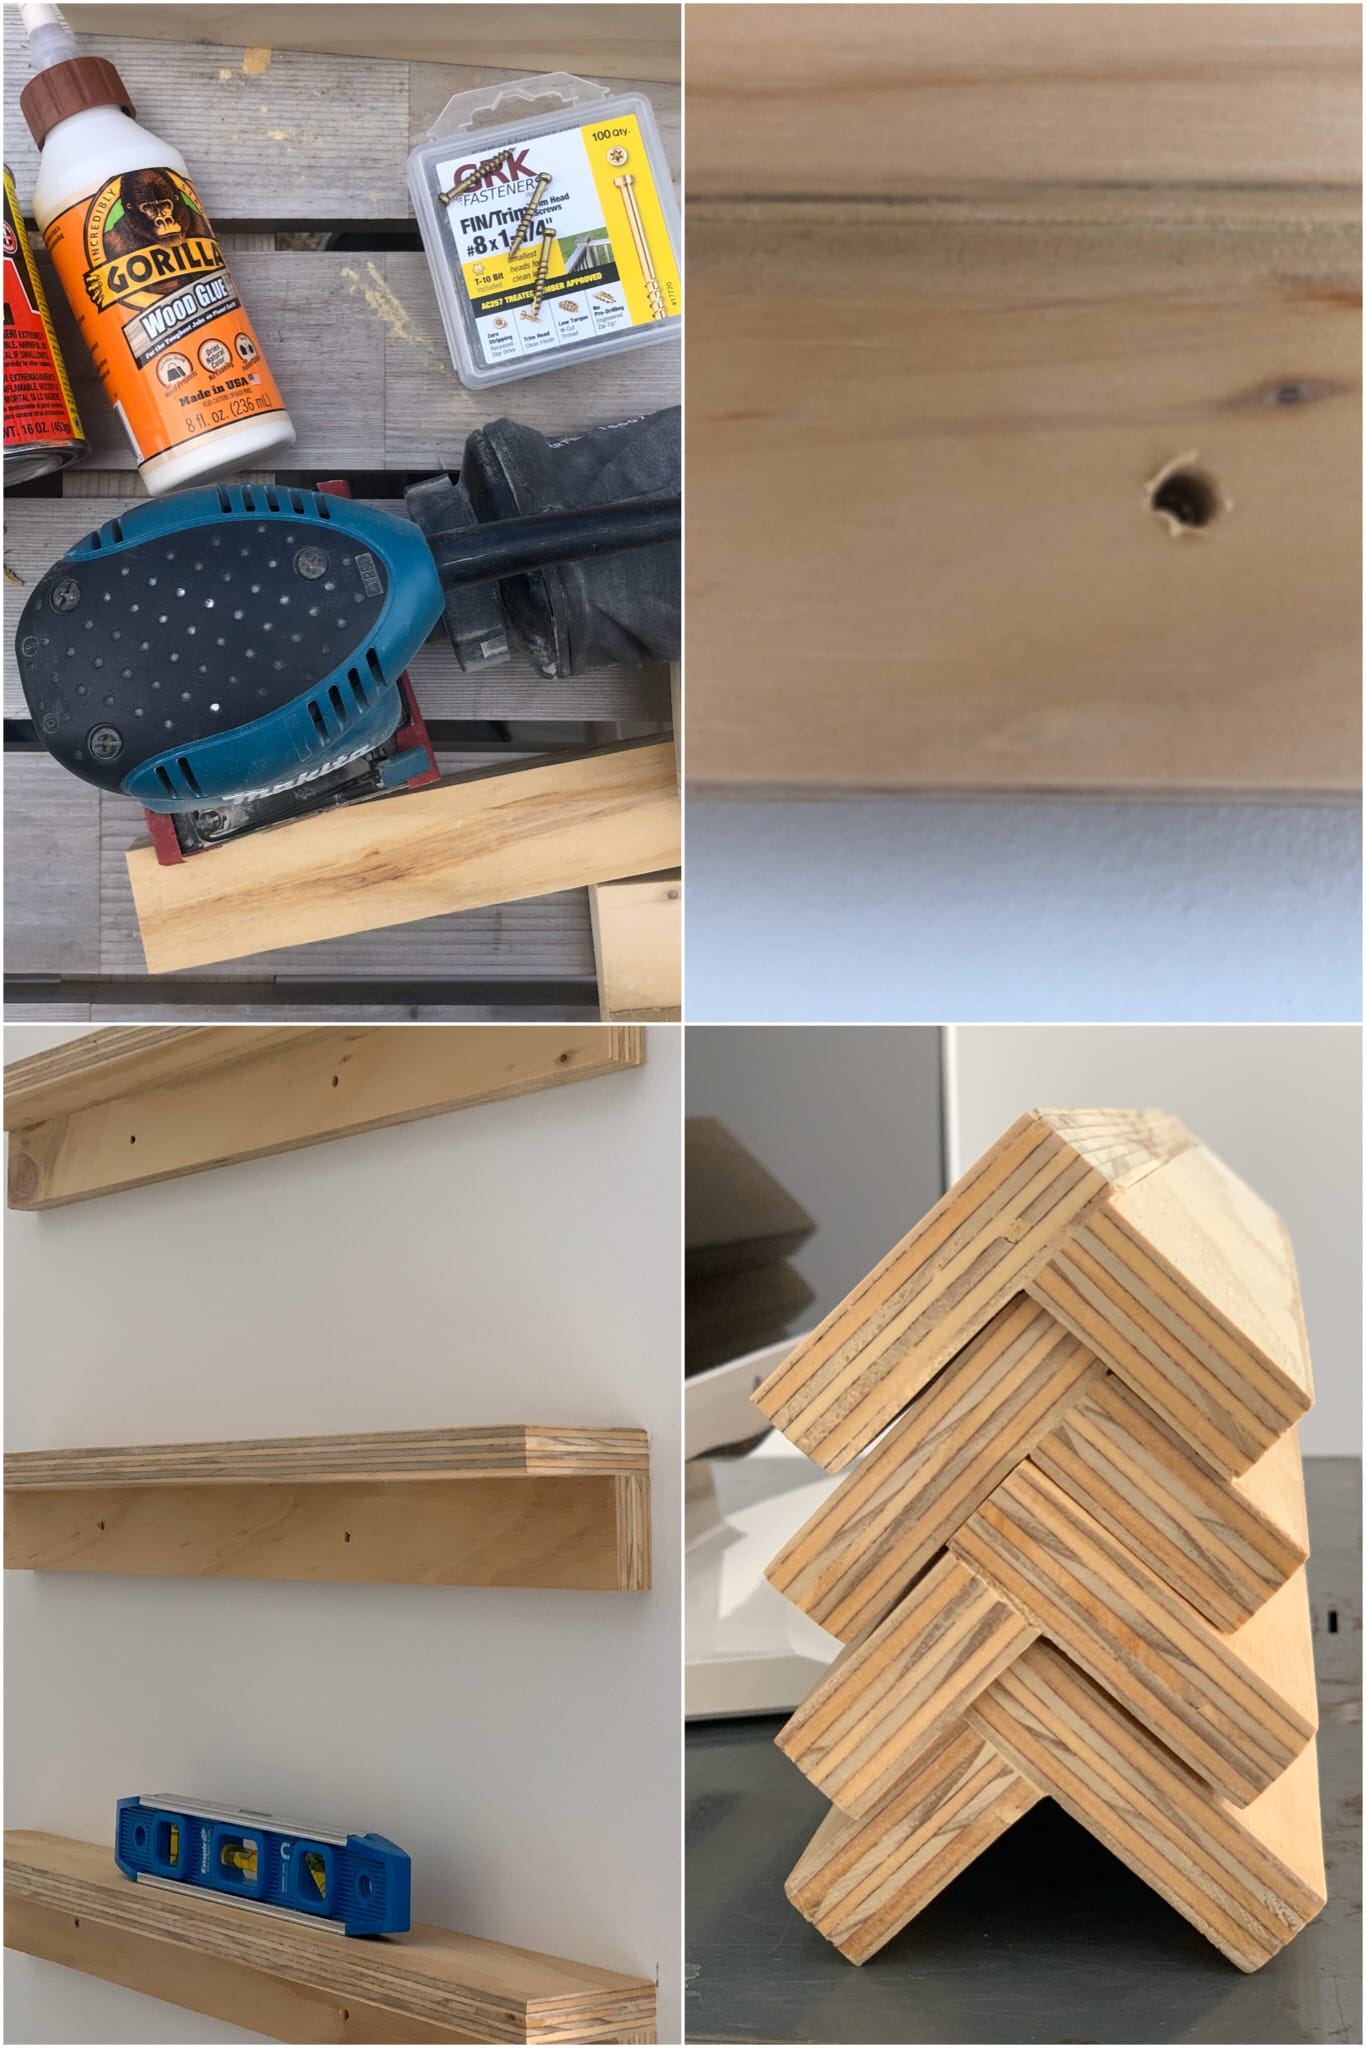 4 photos of wood, tools